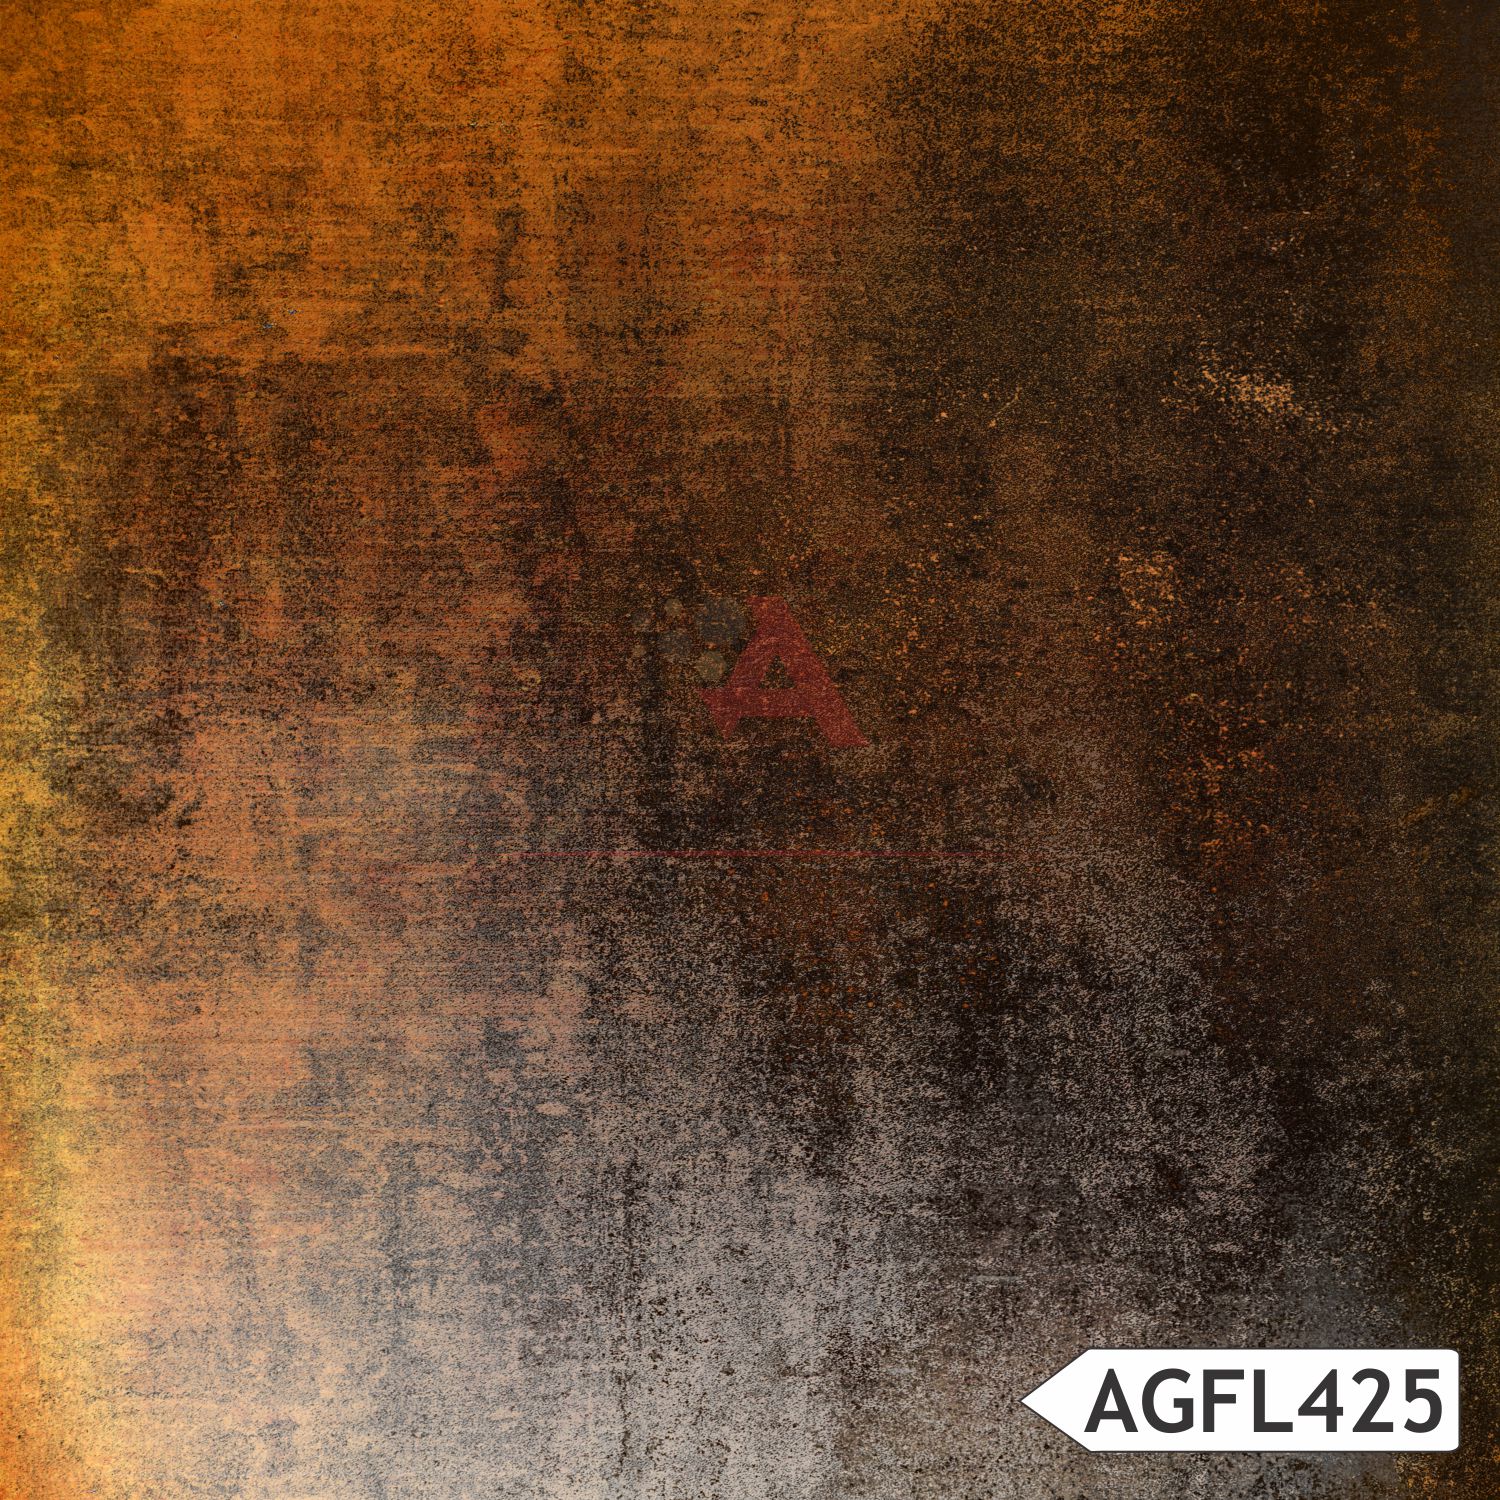 DESIGN CODE - AGFL425